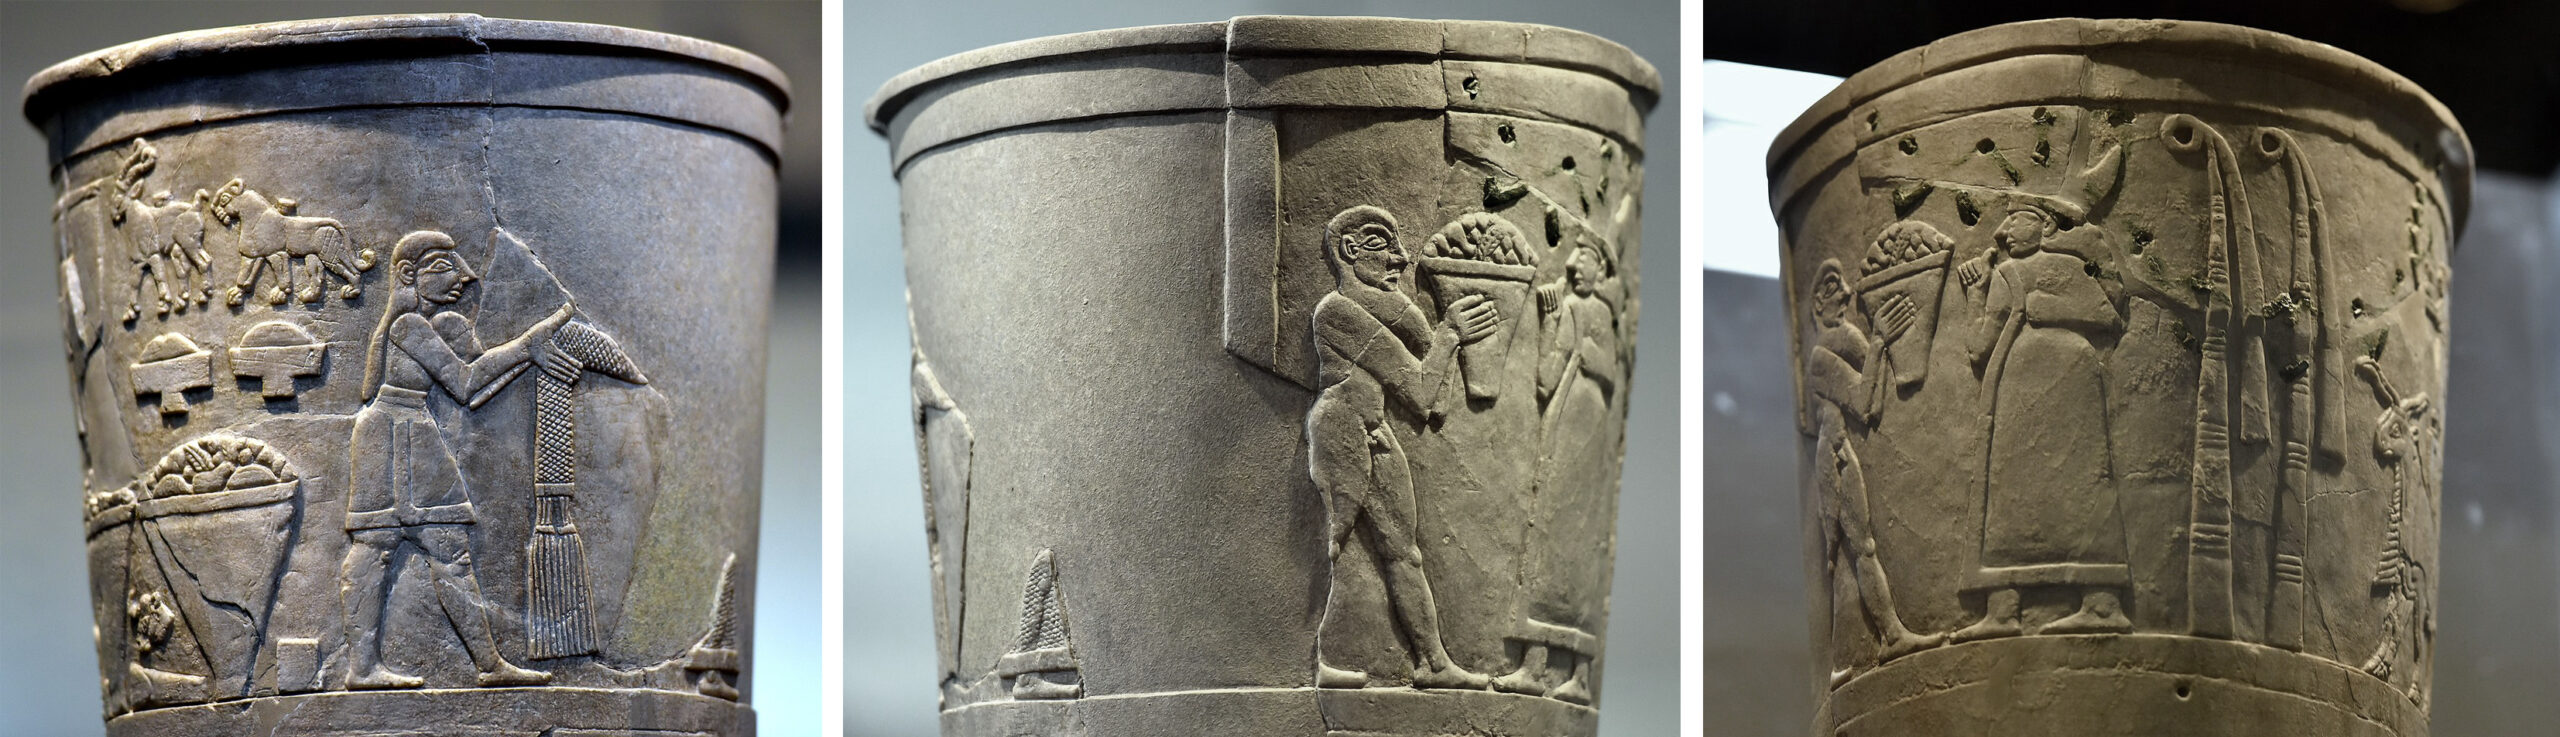 Top band (details), Warka (Uruk) Vase, Uruk, Late Uruk period, c. 3500–3000 B.C.E., 105 cm high (National Museum of Iraq; photo: Osama Shukir Muhammed Amin FRCP(Glasg), CC BY-SA 4.0)